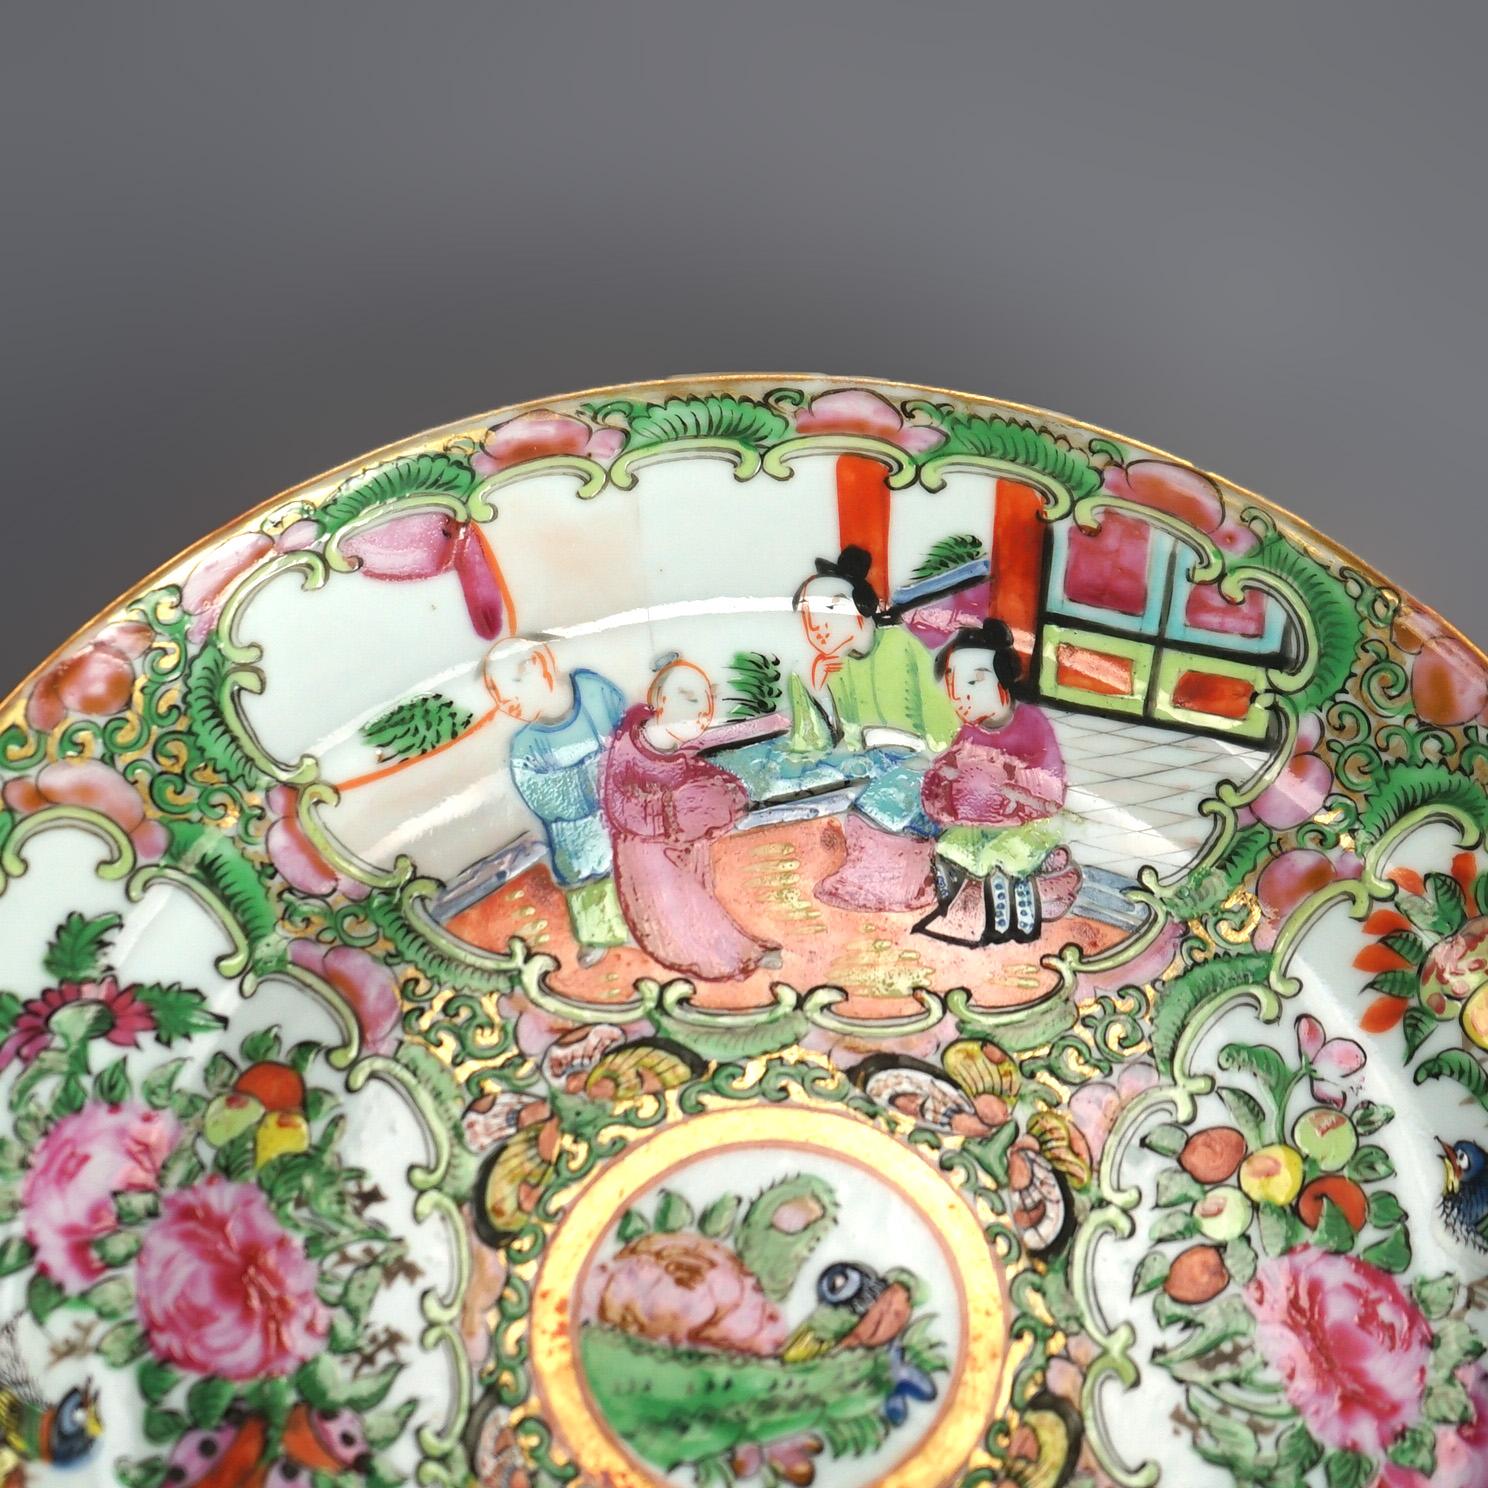 Antique Chinese Rose Medallion Porcelain Plates with Reserves having Gardens & Genre Scenes C1900

Measures - 1